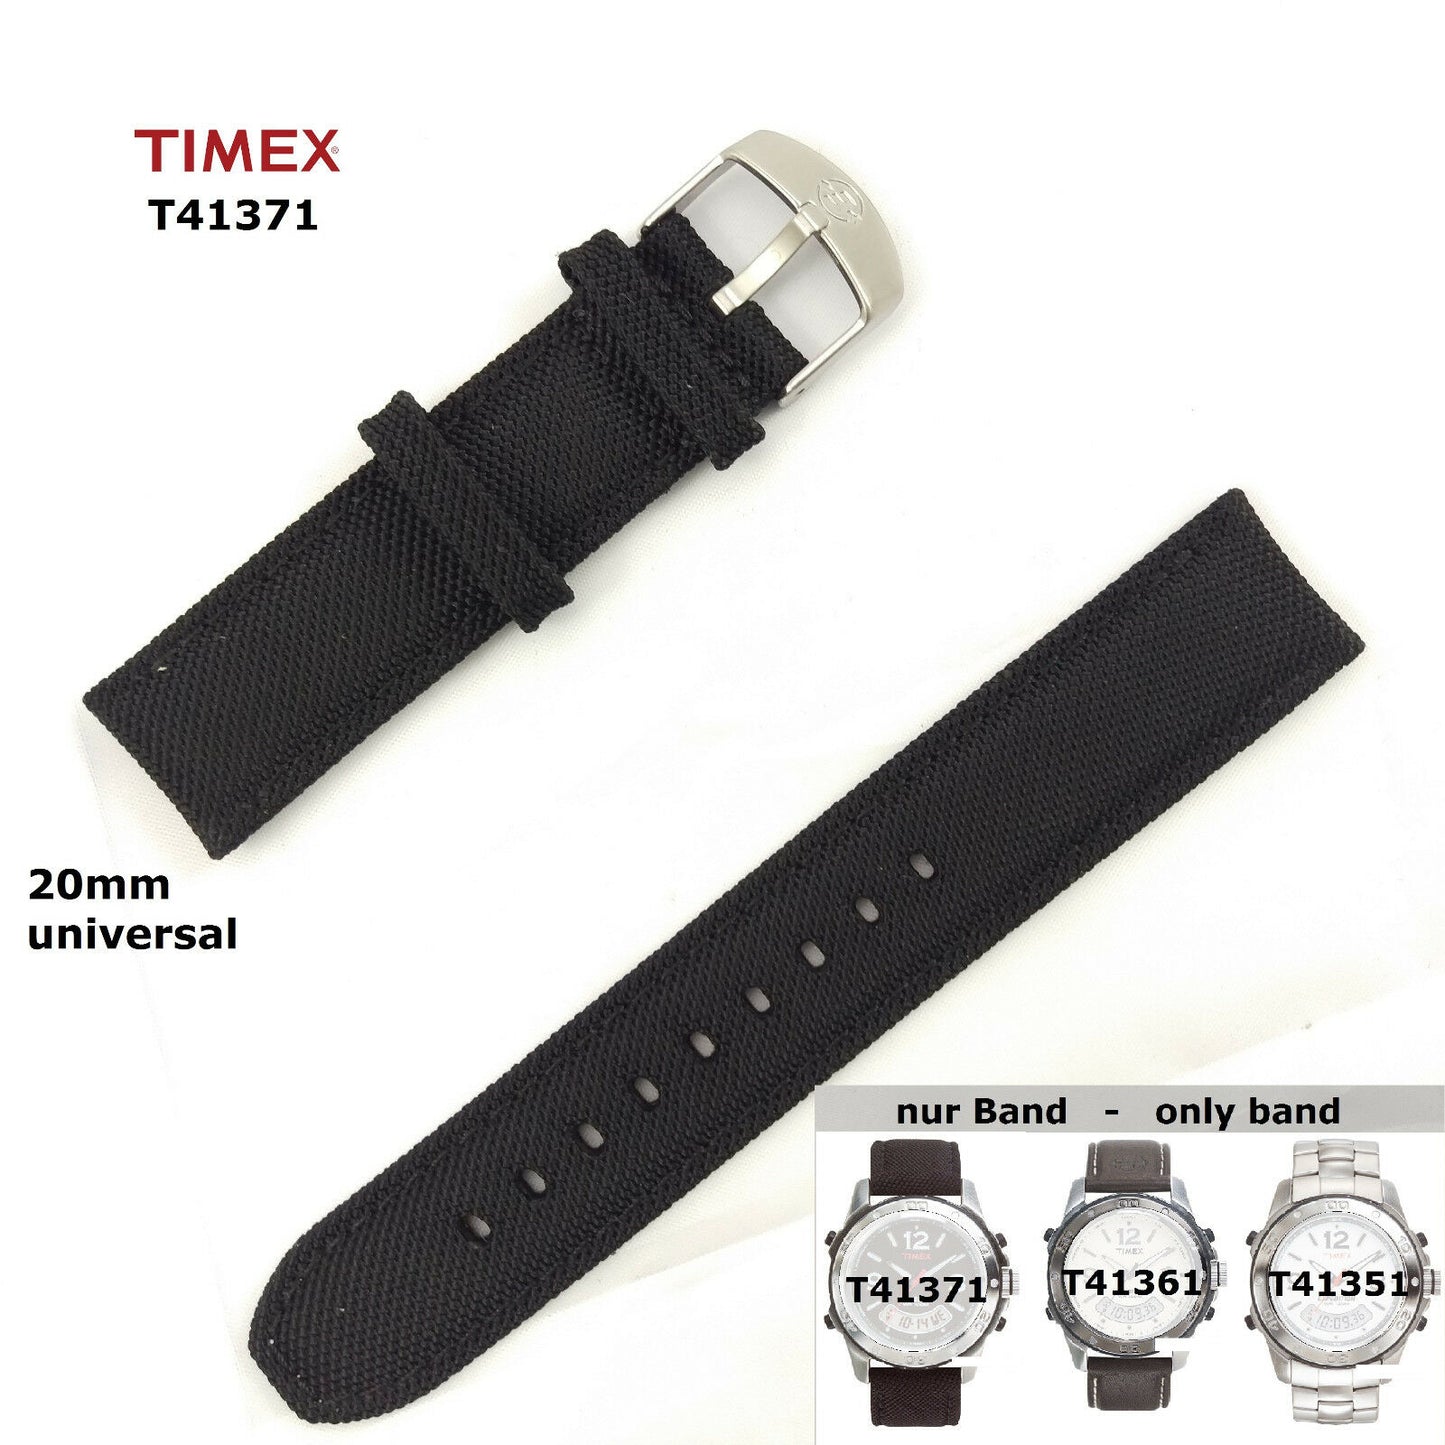 TIMEX Ersatzarmband T41371 EXPEDITION Combo - 20mm universal passt T41361 T41351